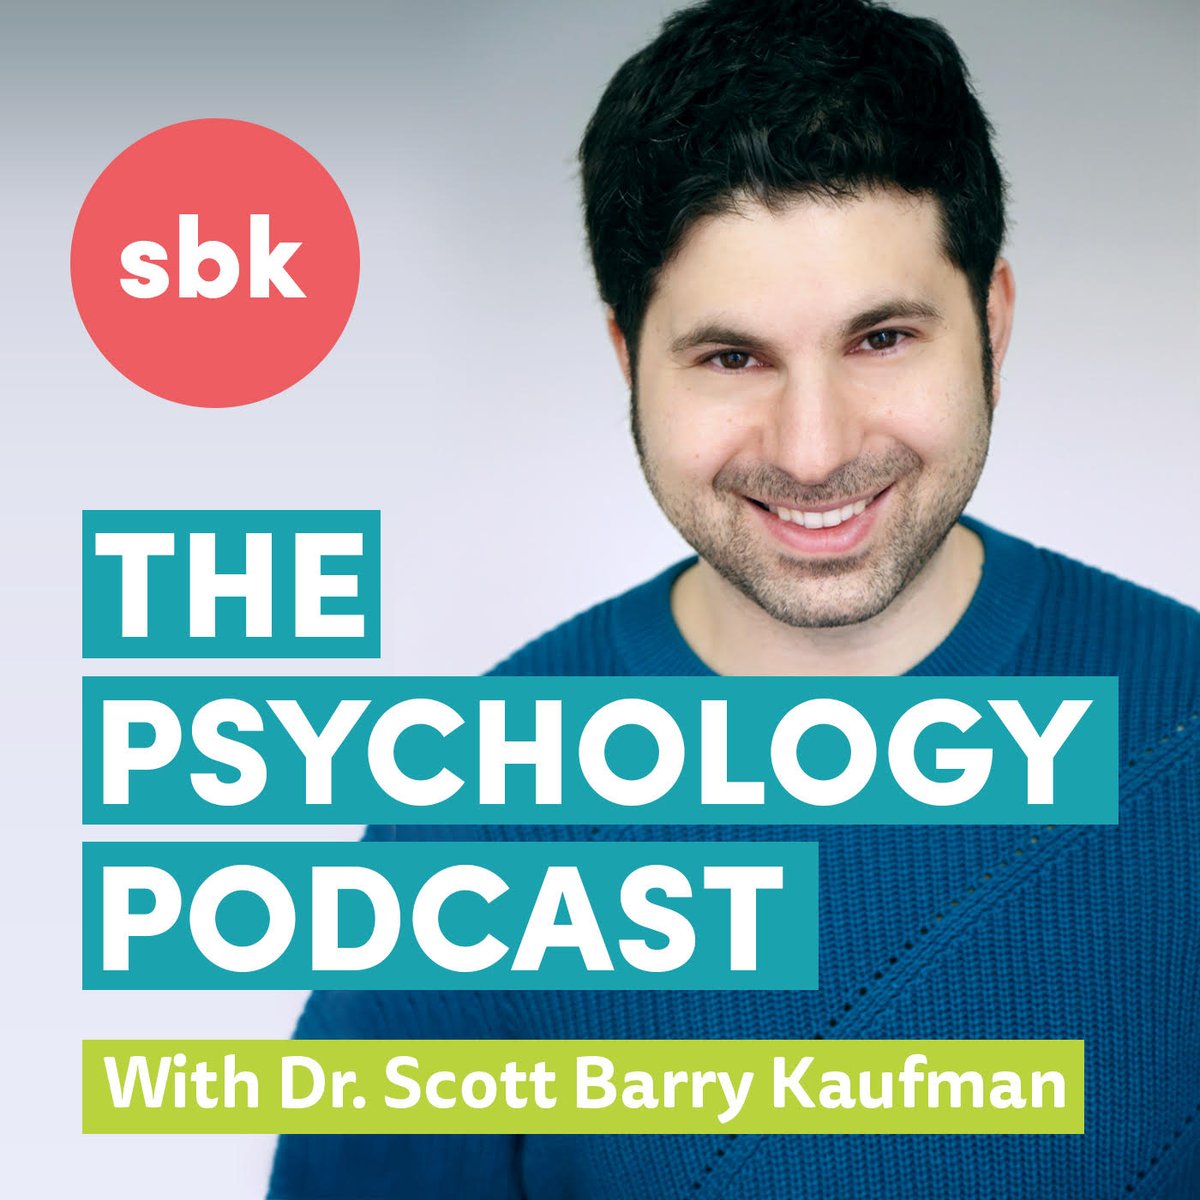 [The Psychology Podcast] 183: Normal Sucks #thePsychologyPodcast 
podplayer.net/?id=94426030 via @PodcastAddict